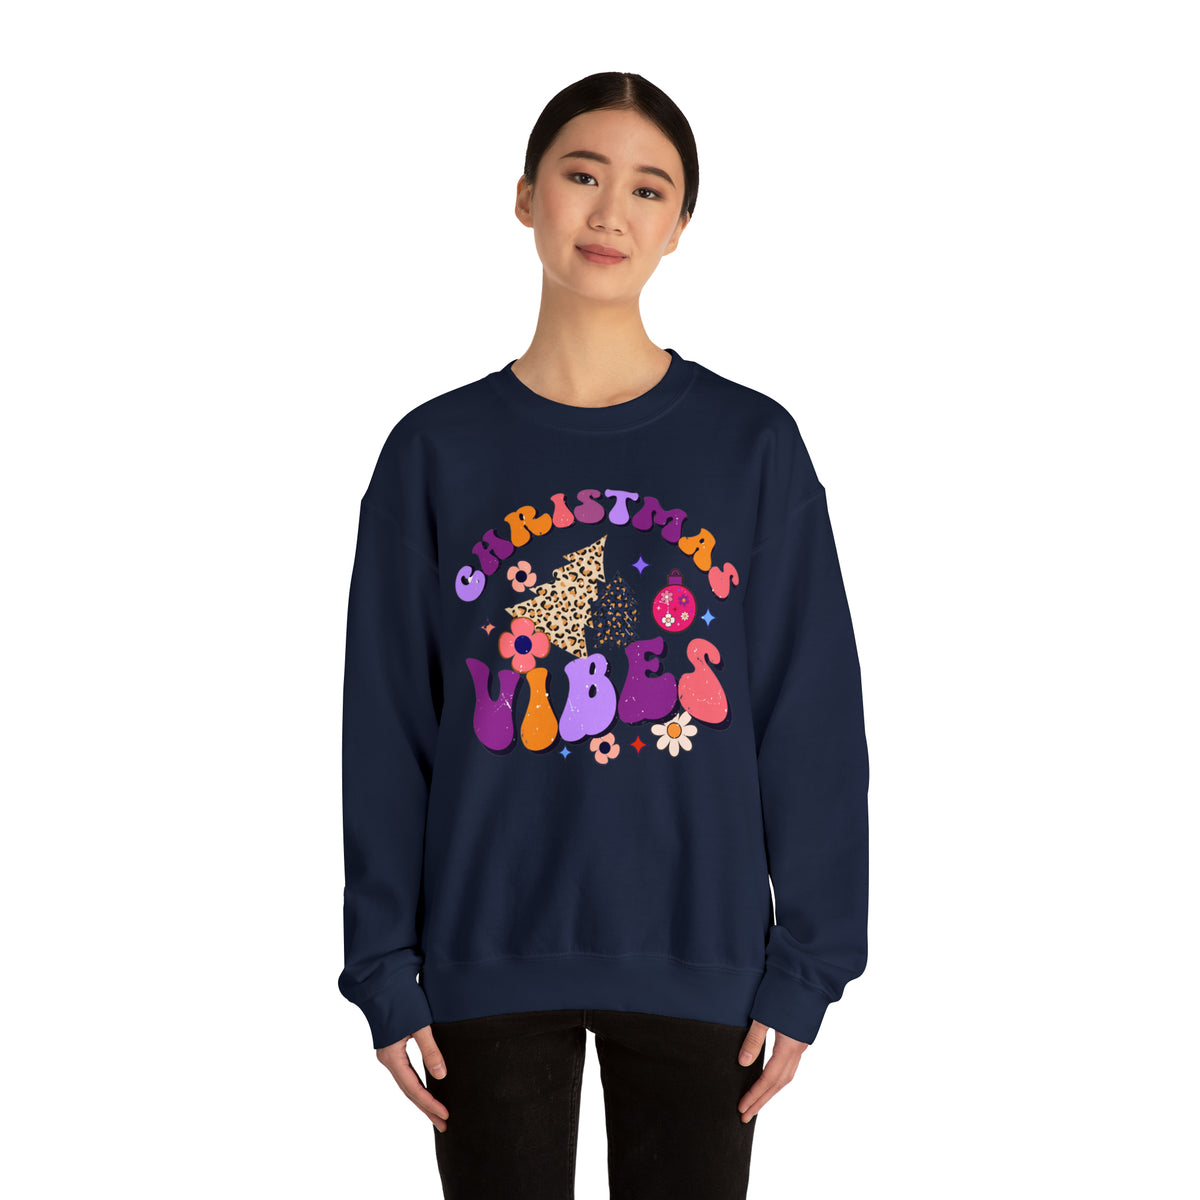 Christmas Vibes Sweatshirt, Sweatshirts for Moms, Christmas Sweater, Inspirational Sweater, Mental Health Sweater, Cozy Sweater, Hippie Sweater, Holiday Sweater